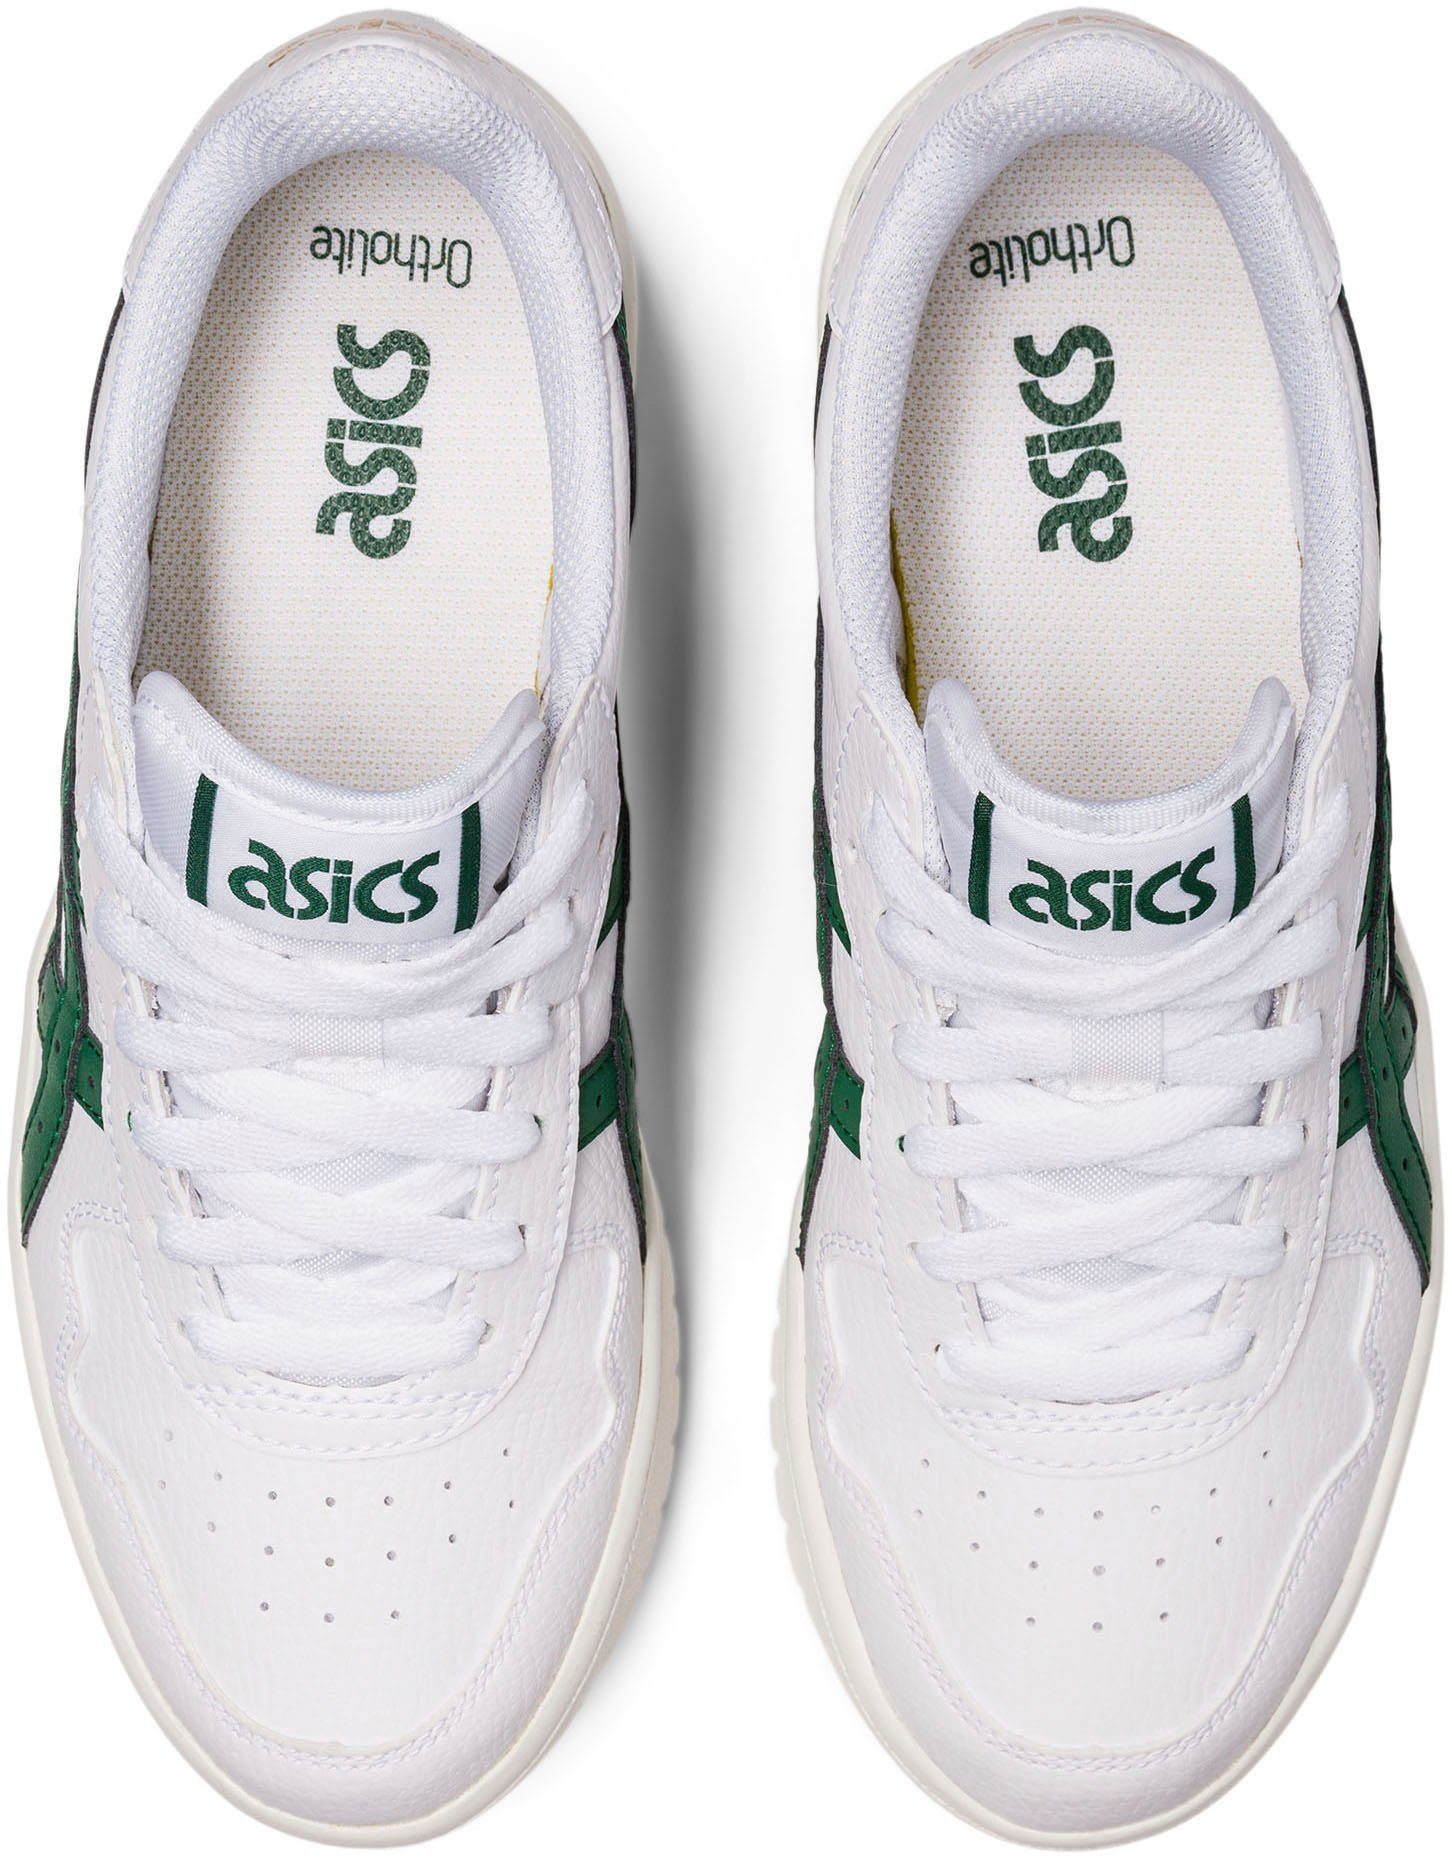 ASICS SportStyle JAPAN Sneaker PF weiß-grün S